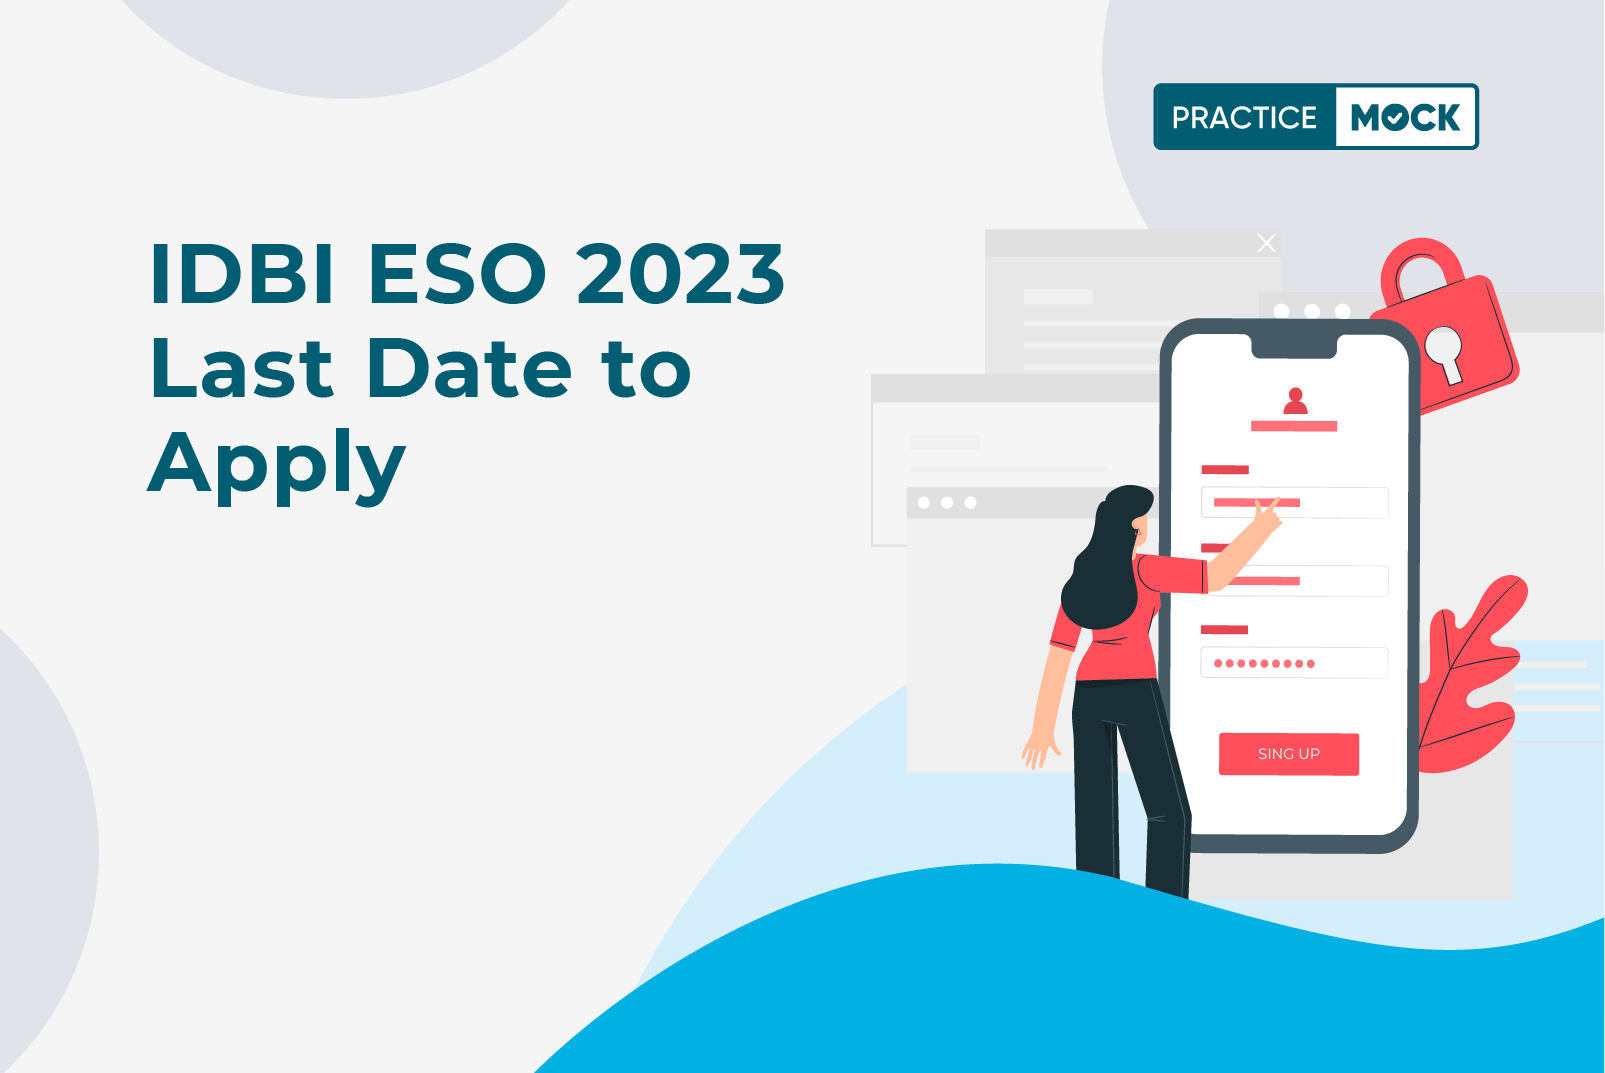 IDBI ESO Last Date to Apply